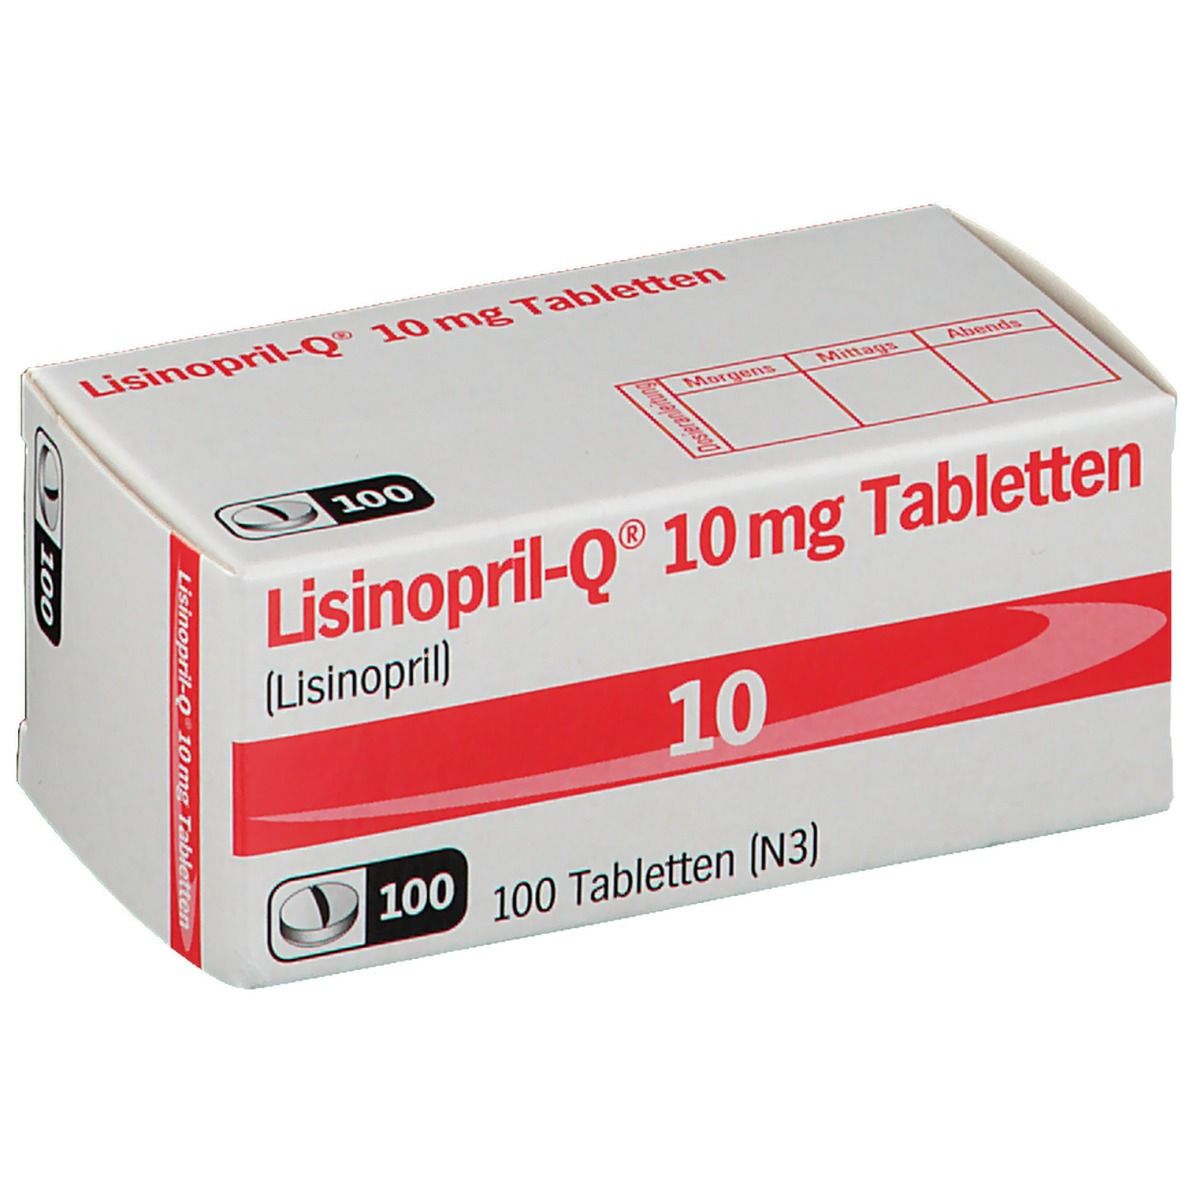 Lisinopril-Q® 10 mg